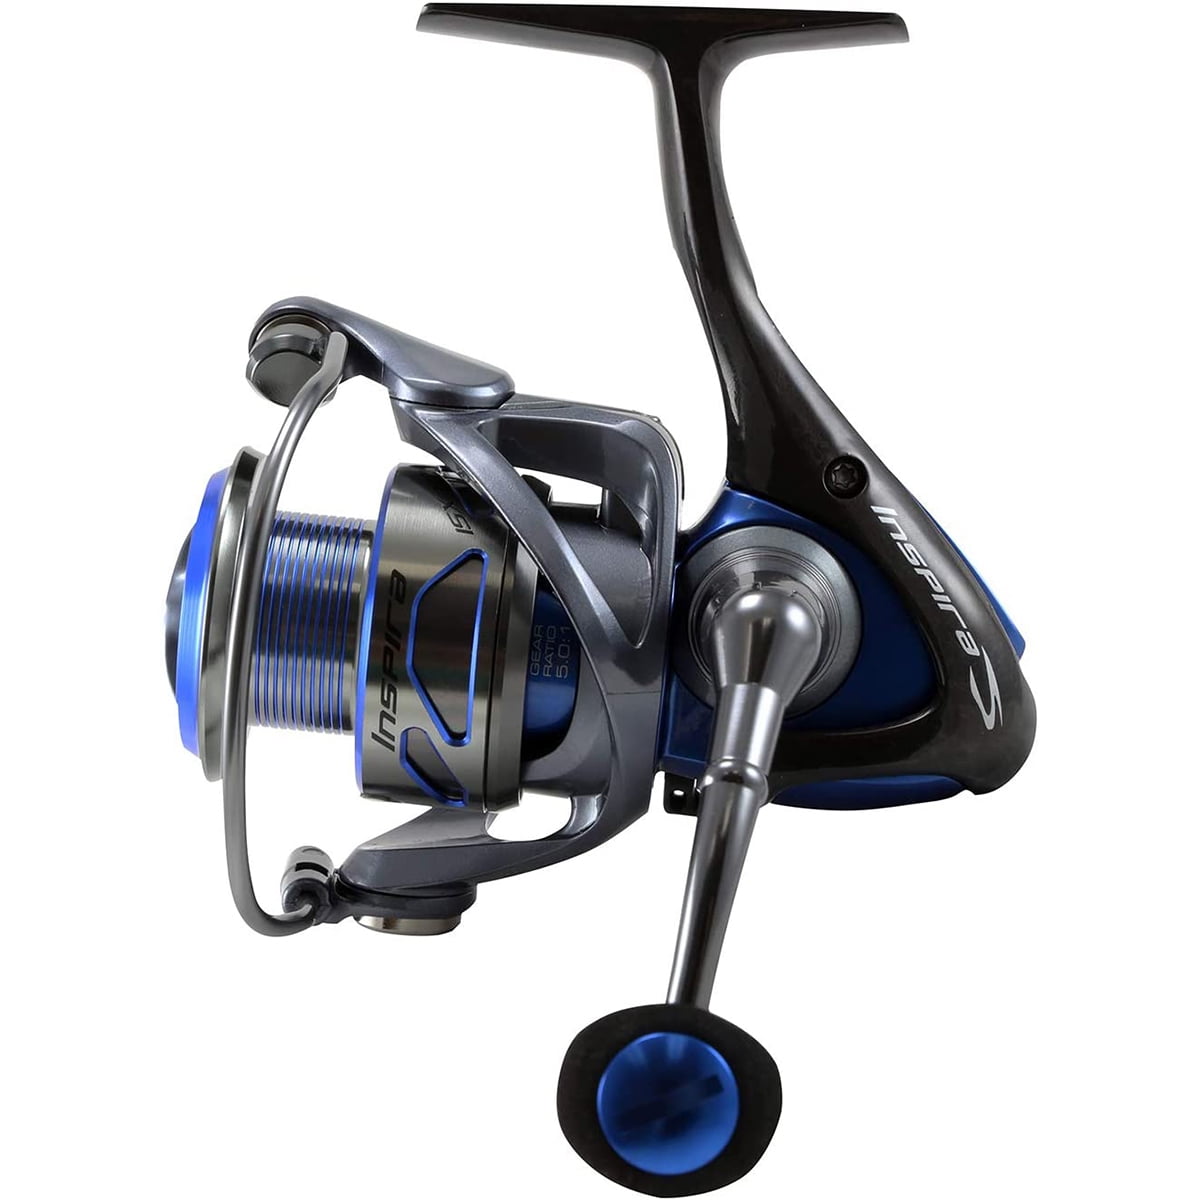 Vivoice Fishing Reel Small Spinning Reel Ultralight Spinning Fishing Reel for 200 (Blue)